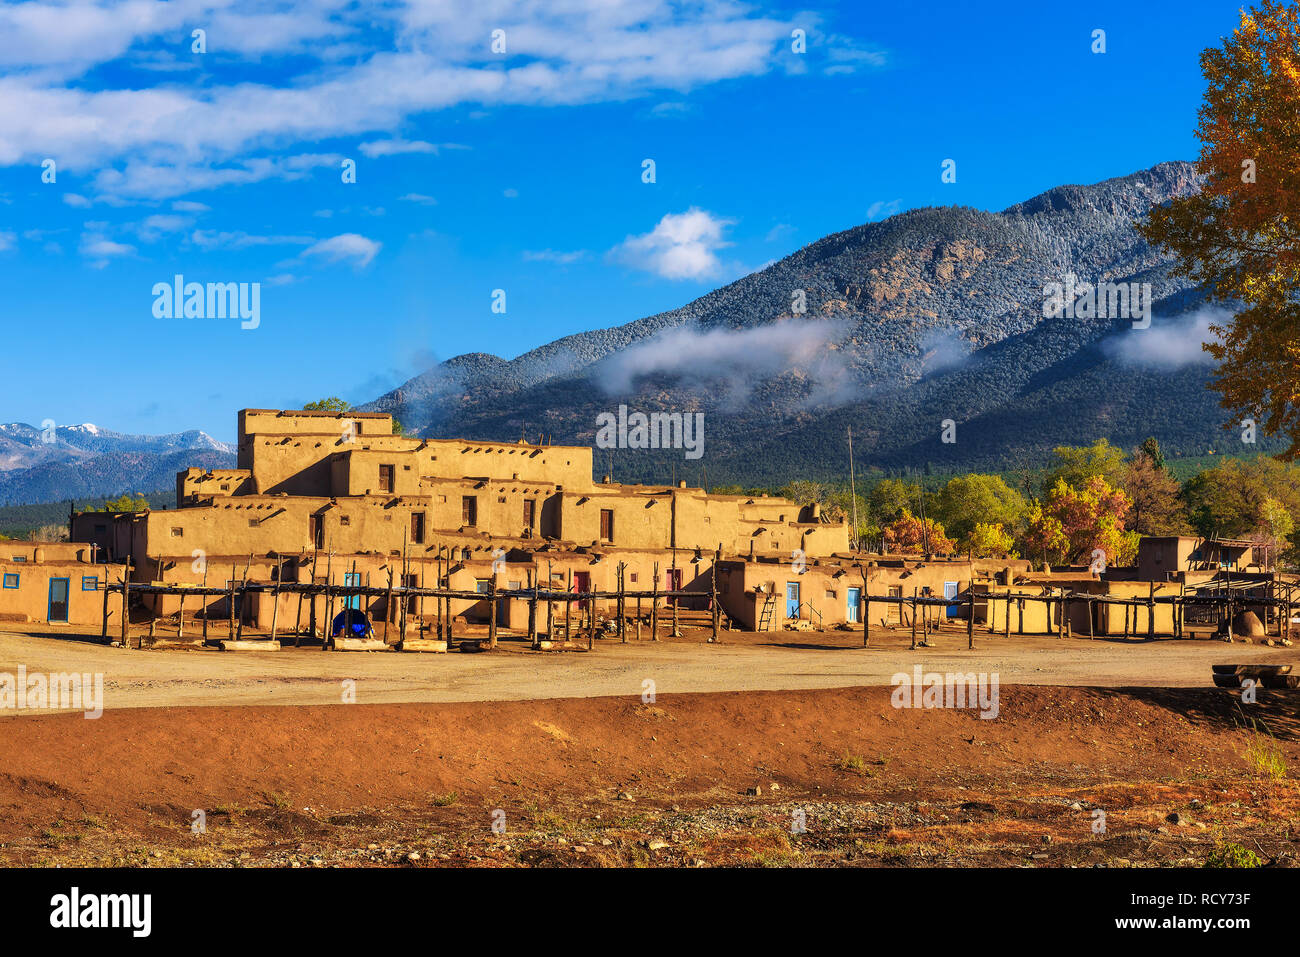 Ancient dwellings of Taos Pueblo, New Mexico Stock Photo